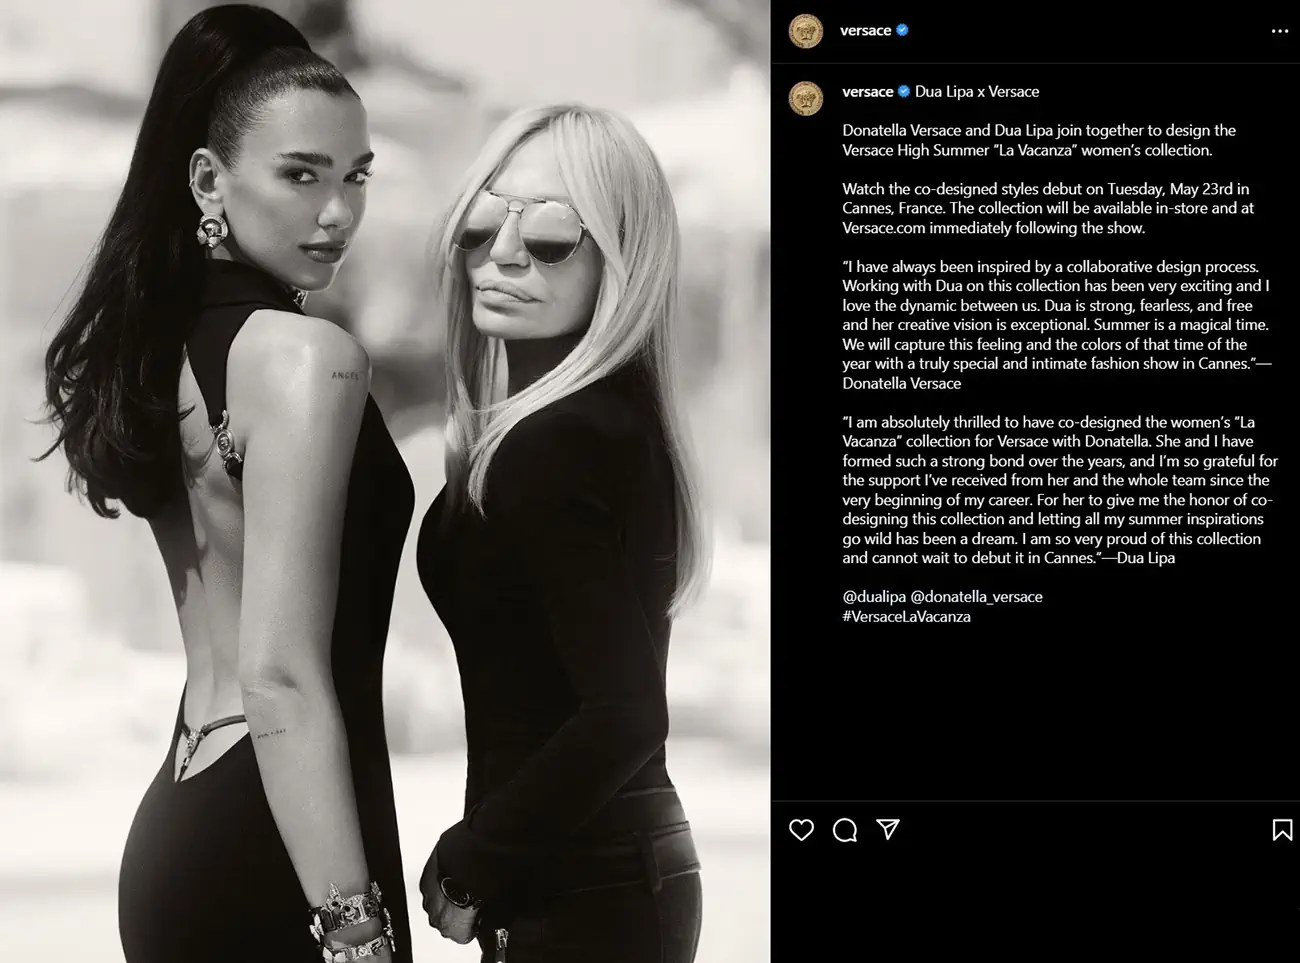 Dua Lipa x Versace unveil “La Vacanza” collection with Cannes showcase